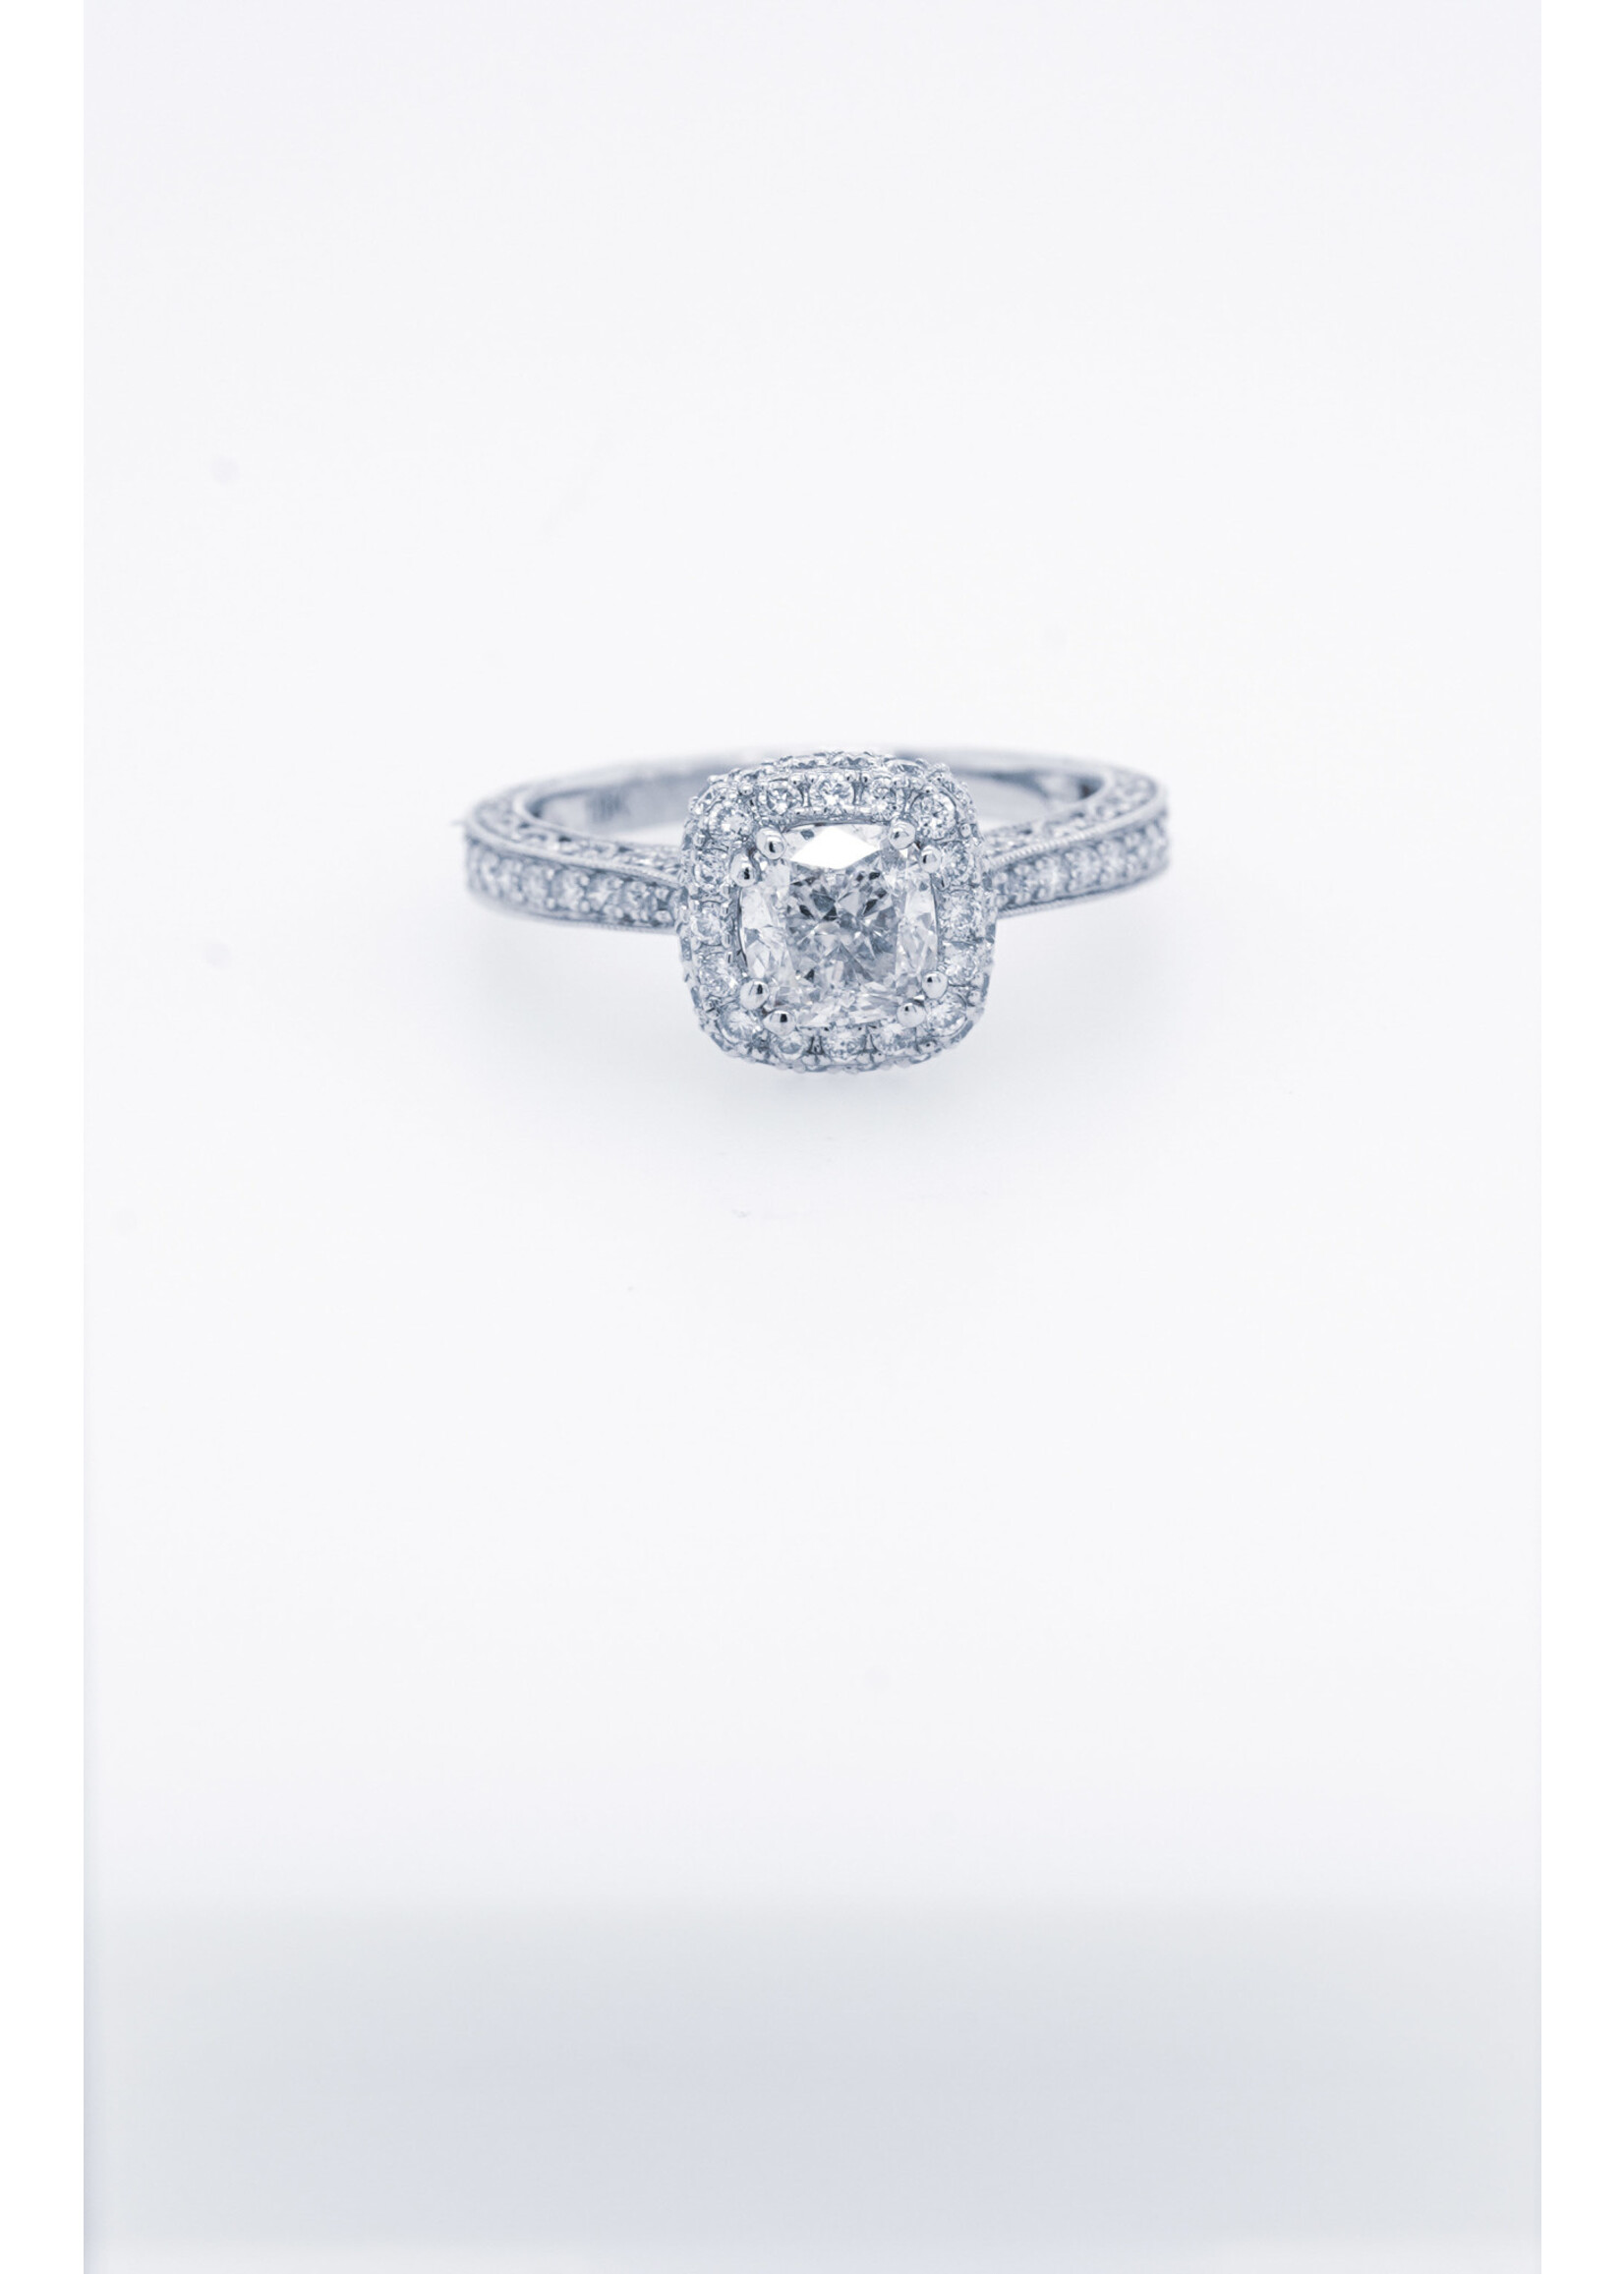 18KW 3.41g 1.87ctw (1.05ctr) I/SI1 GIA Cushion Diamond Halo Engagement Ring (size 6.5)